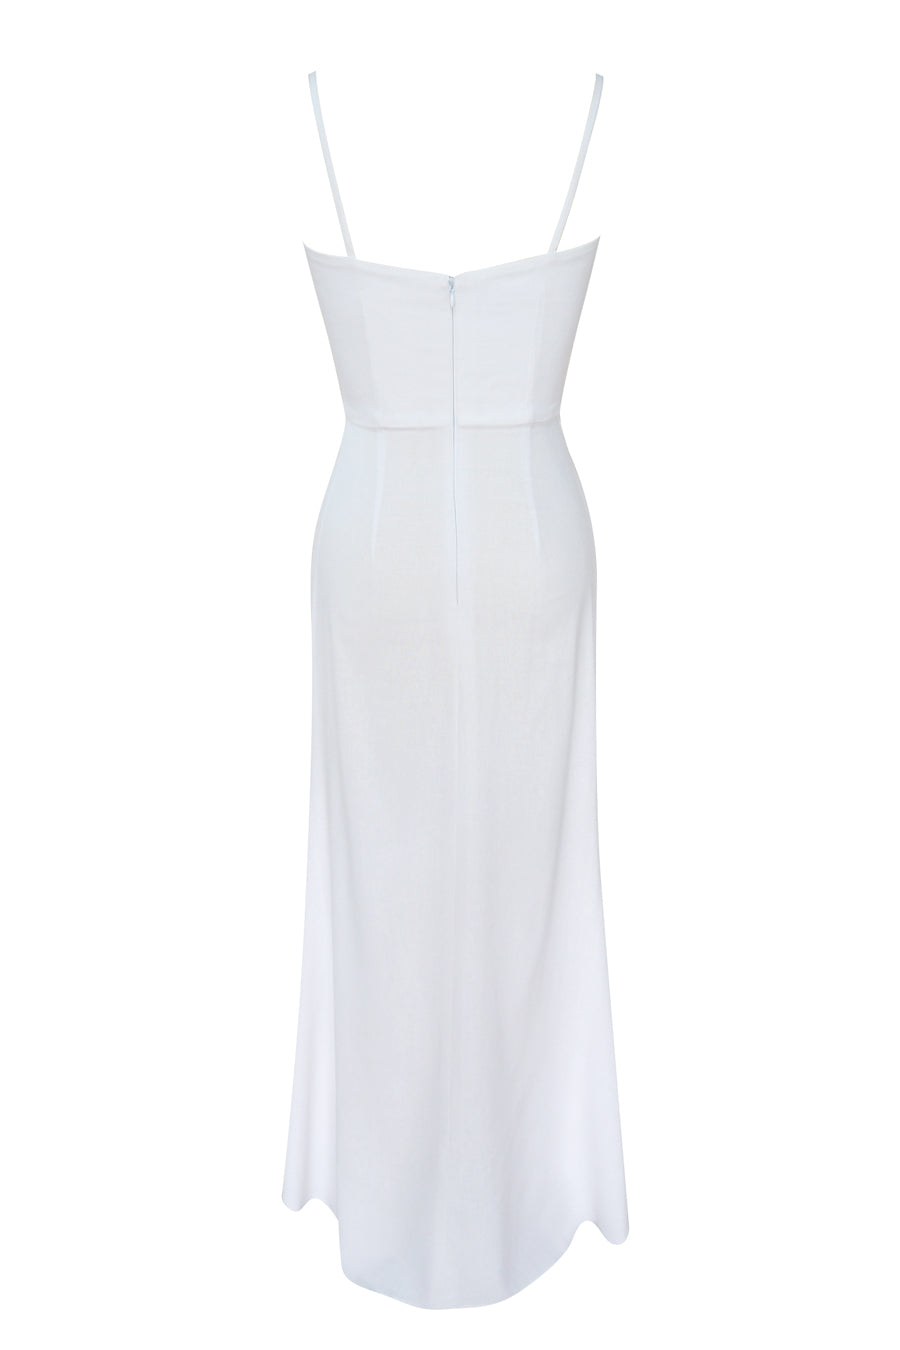 CASABLANCA DRESS - WHITE